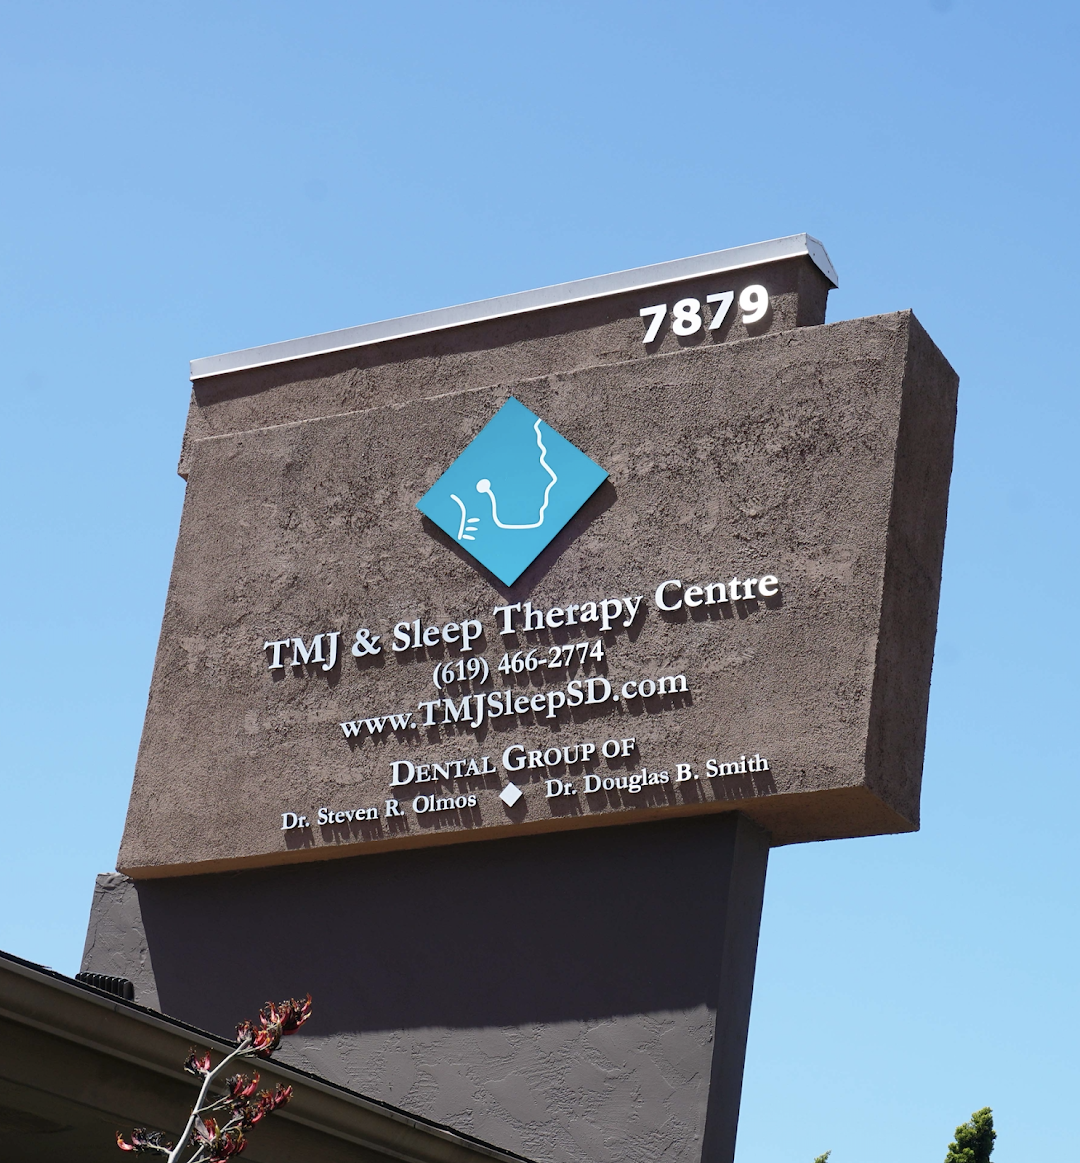 TMJ & Sleep Therapy Centre of San Diego